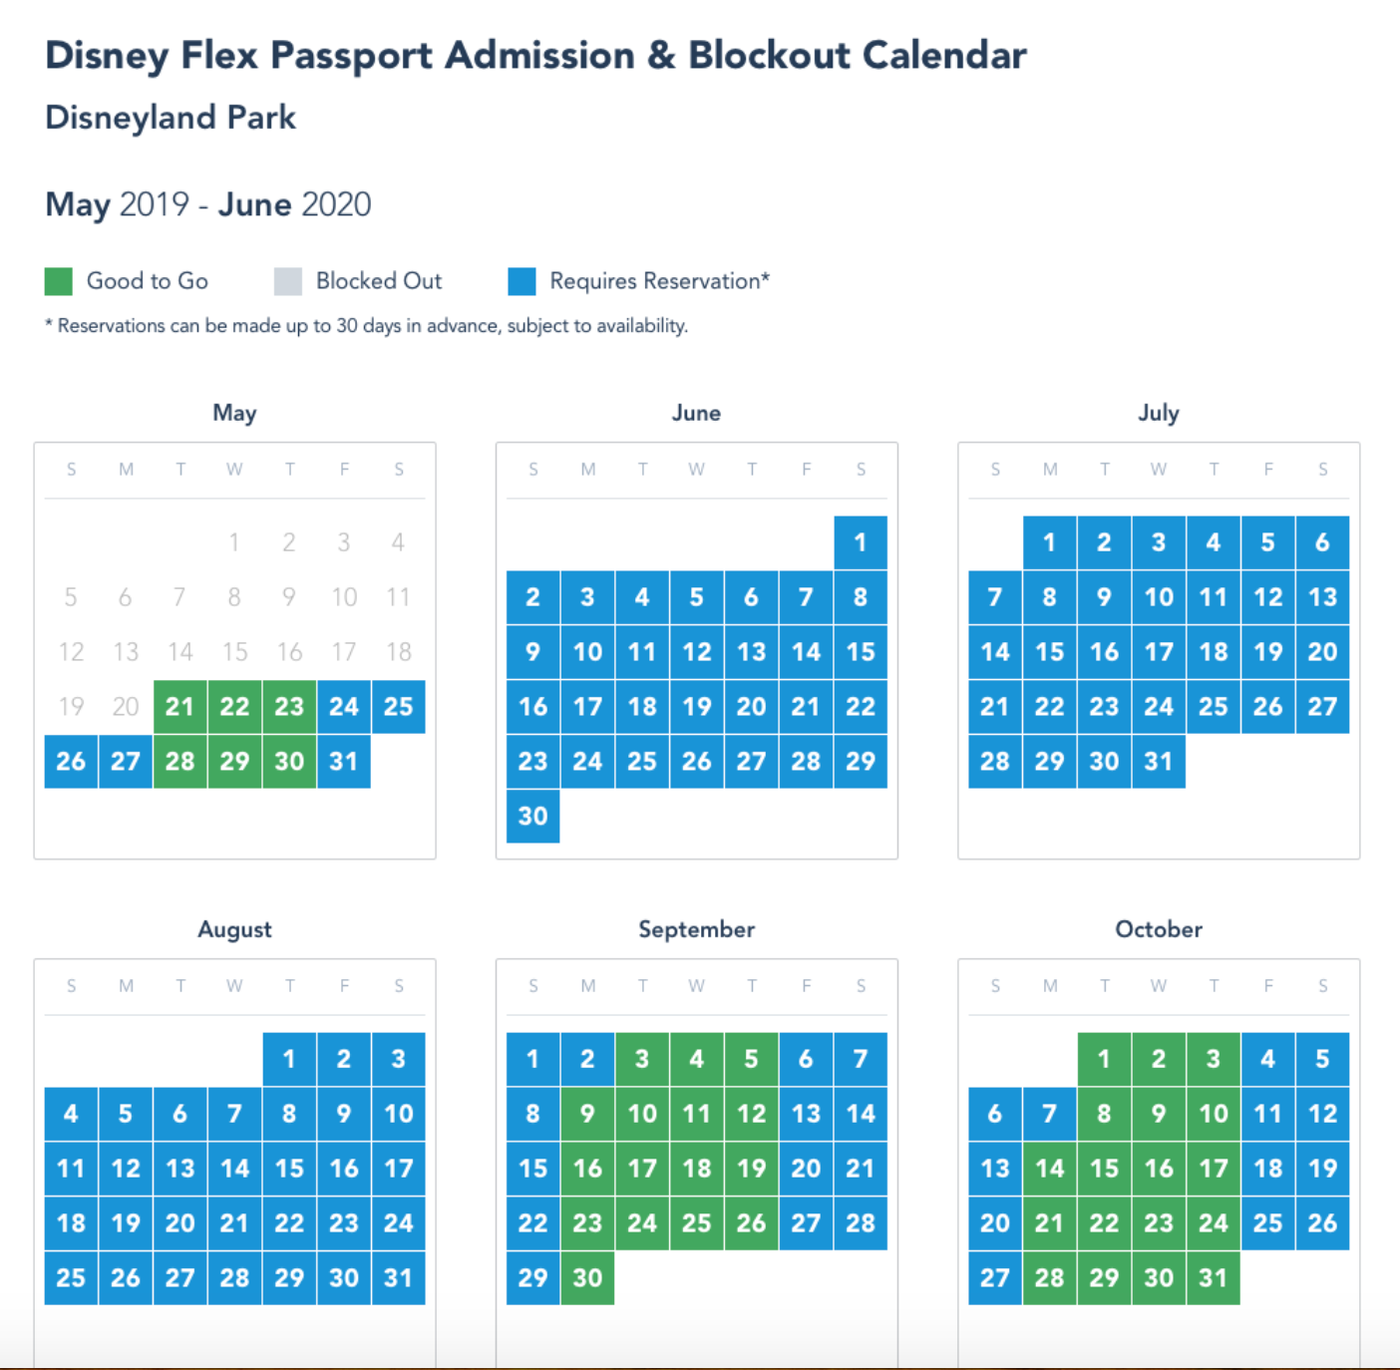 Disneyland Introduces New Annual Pass Is the Disney Flex Passport a